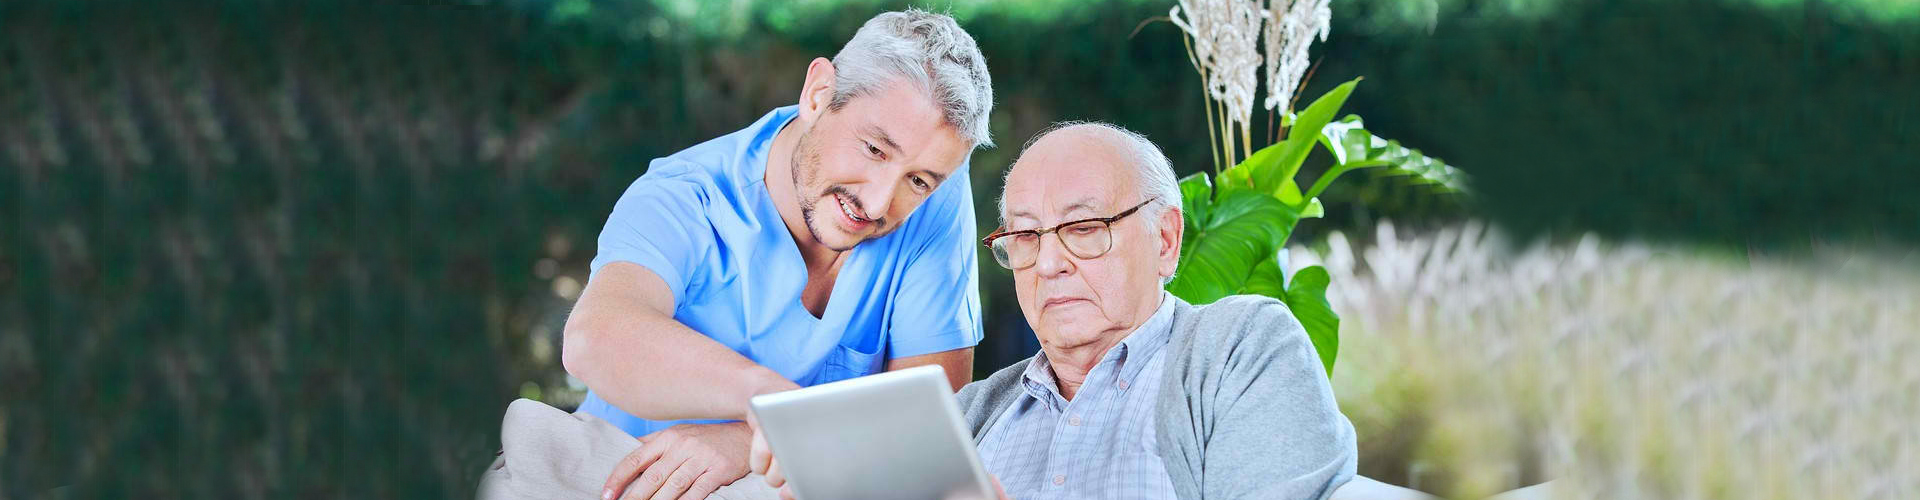 assisting senior men in using digital tablet at nursing home porch